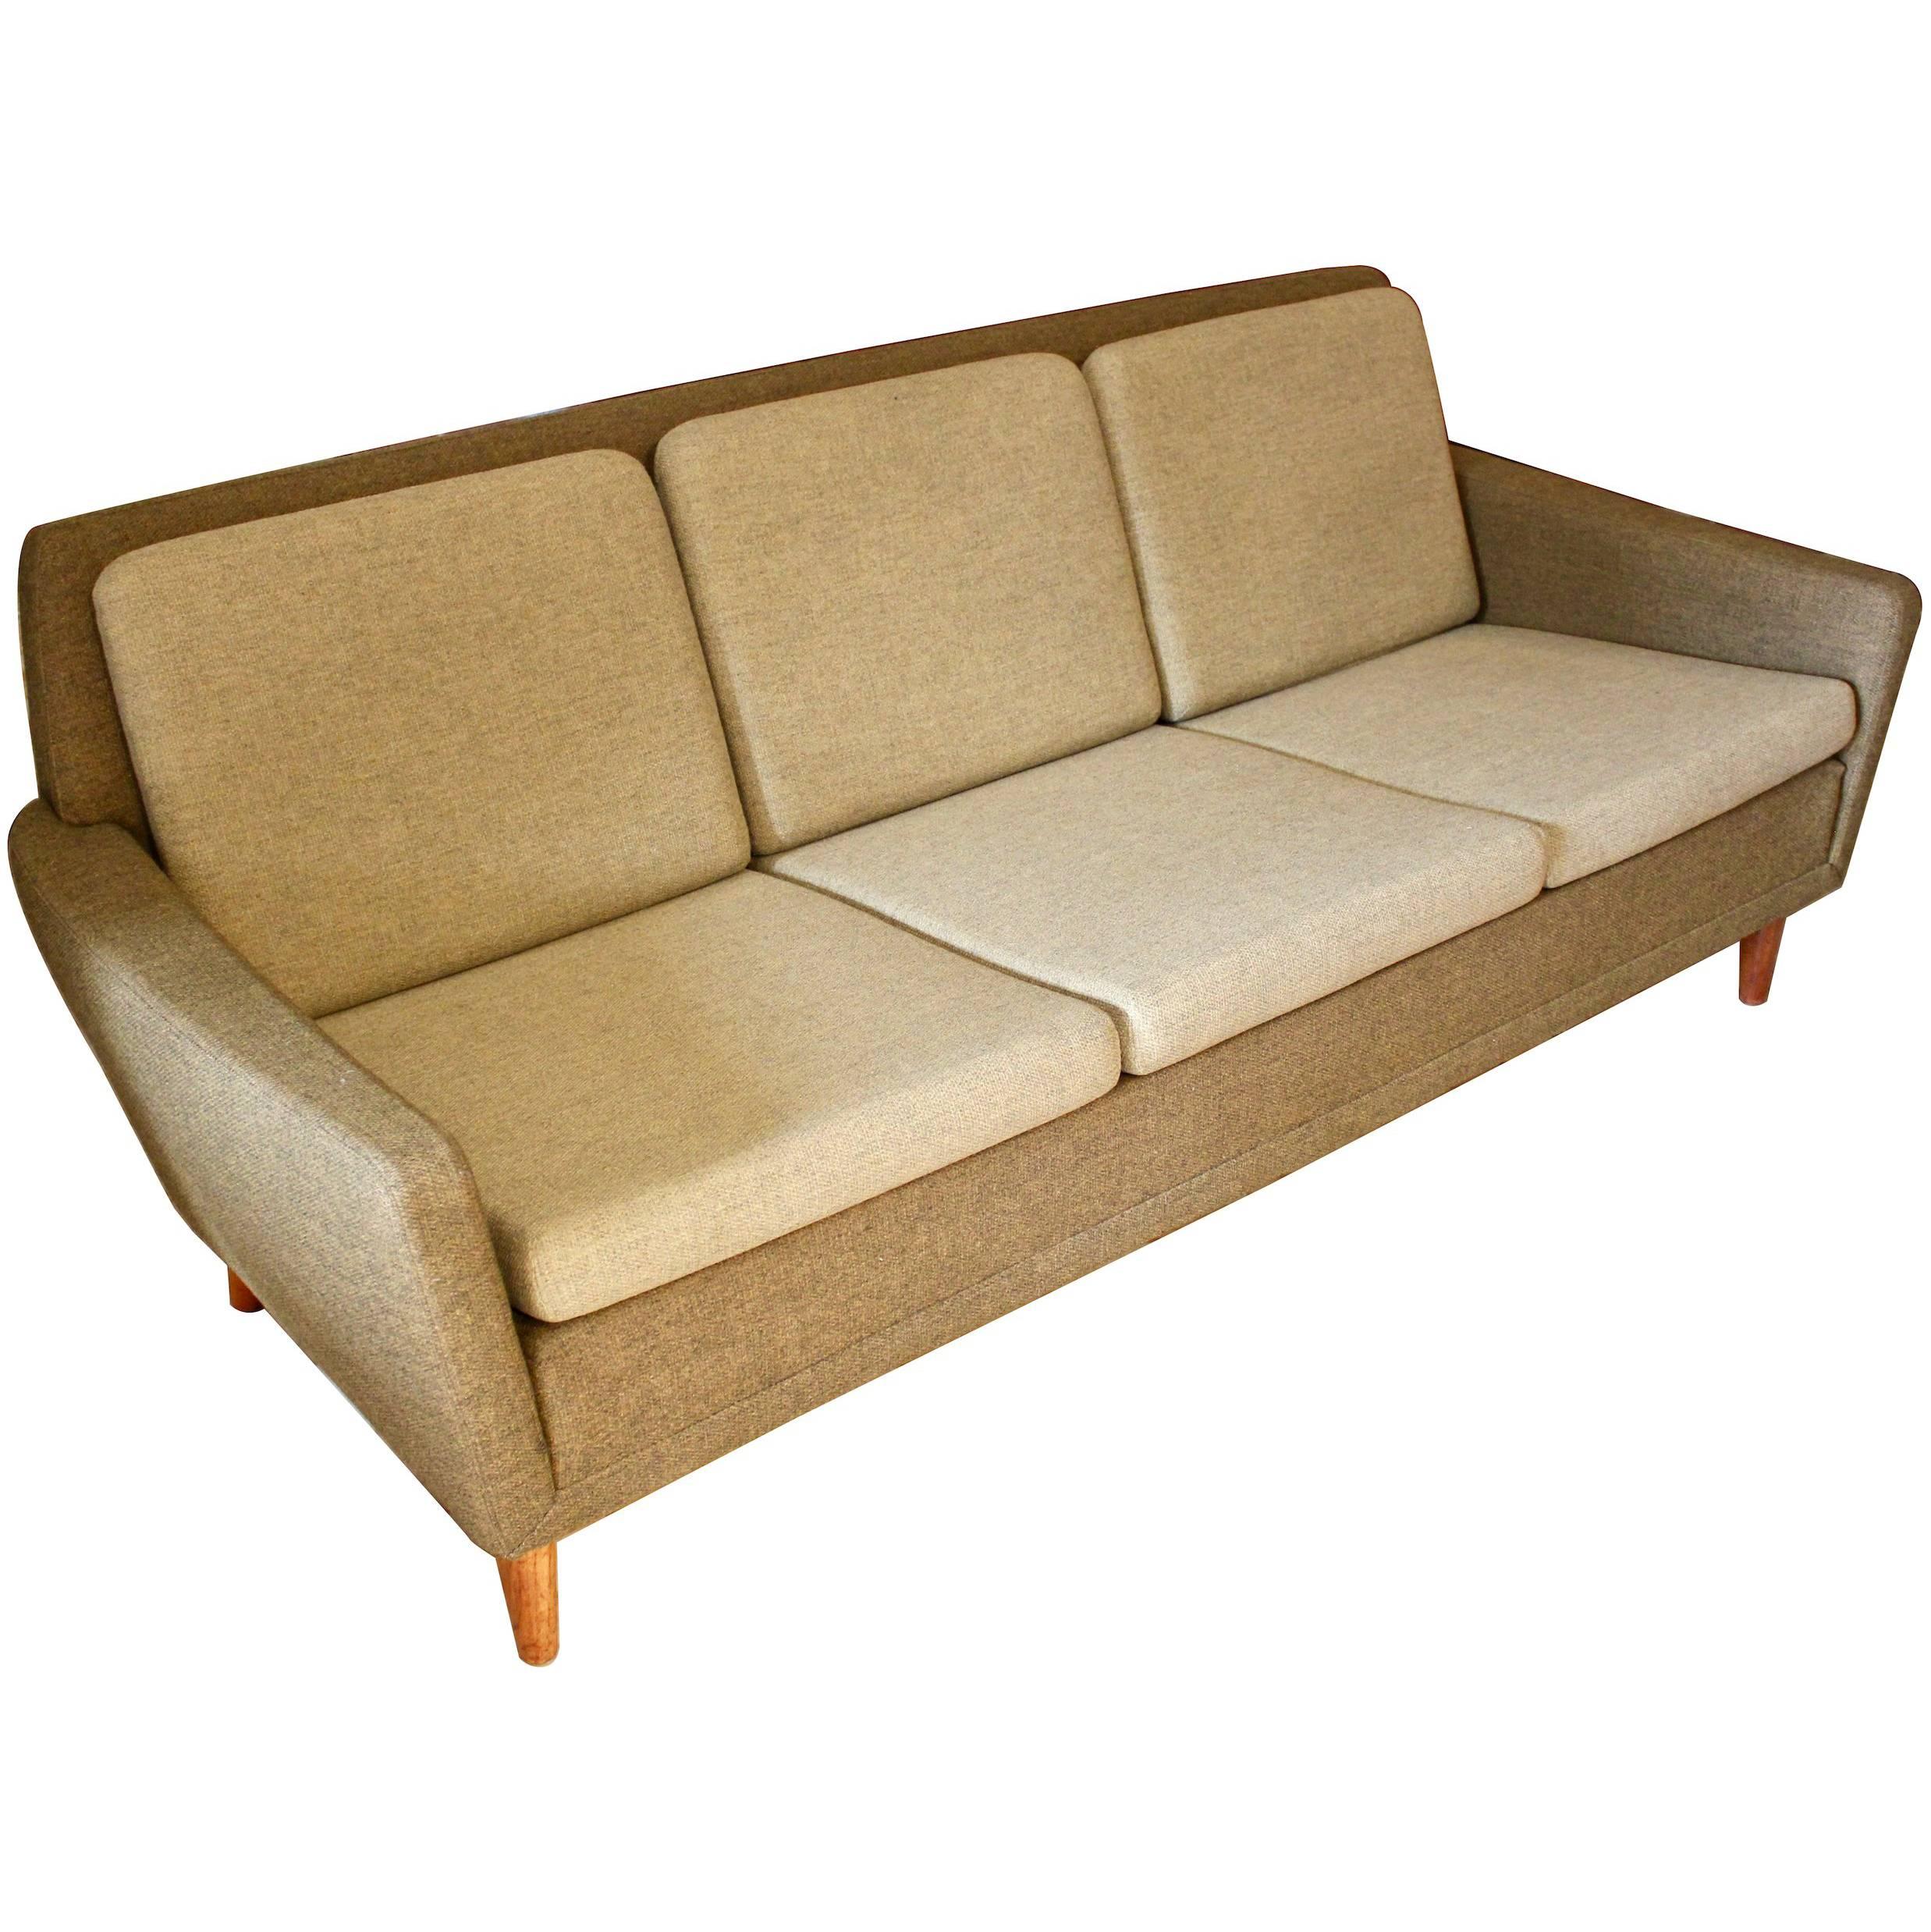 Upholstered Sofa by Folke Ohlsson for DUX, circa 1970